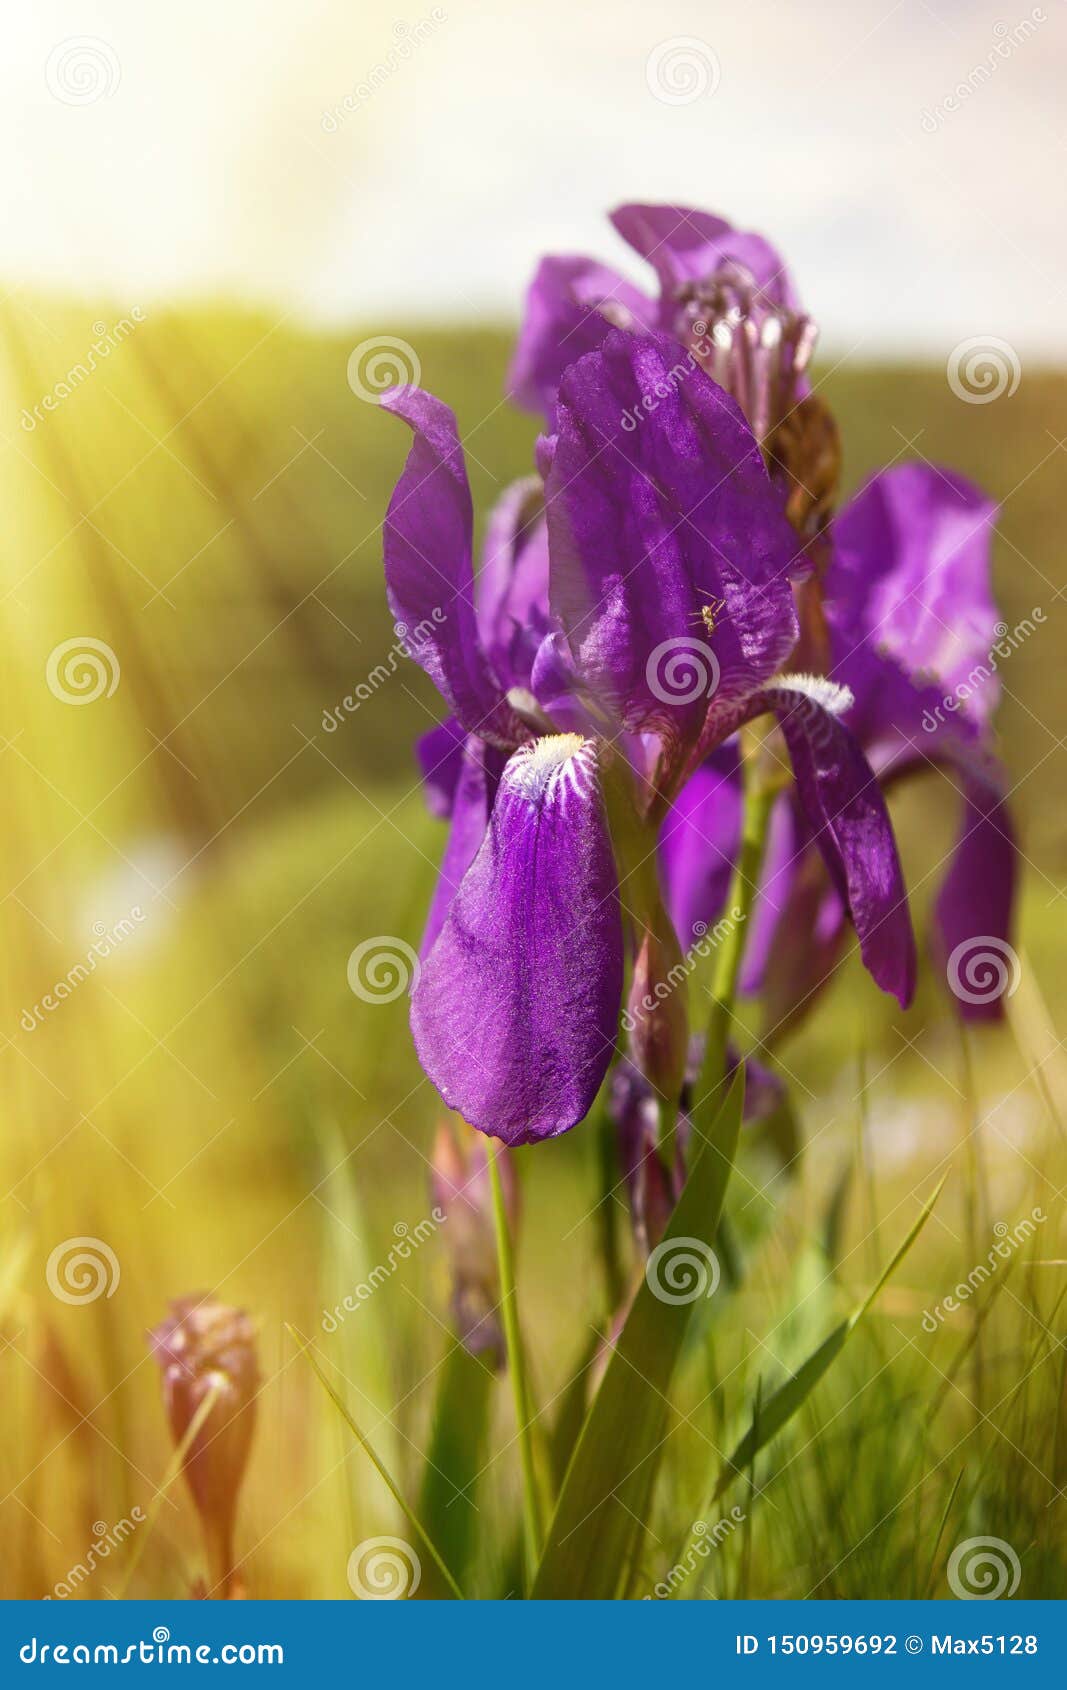 blueflag, iris